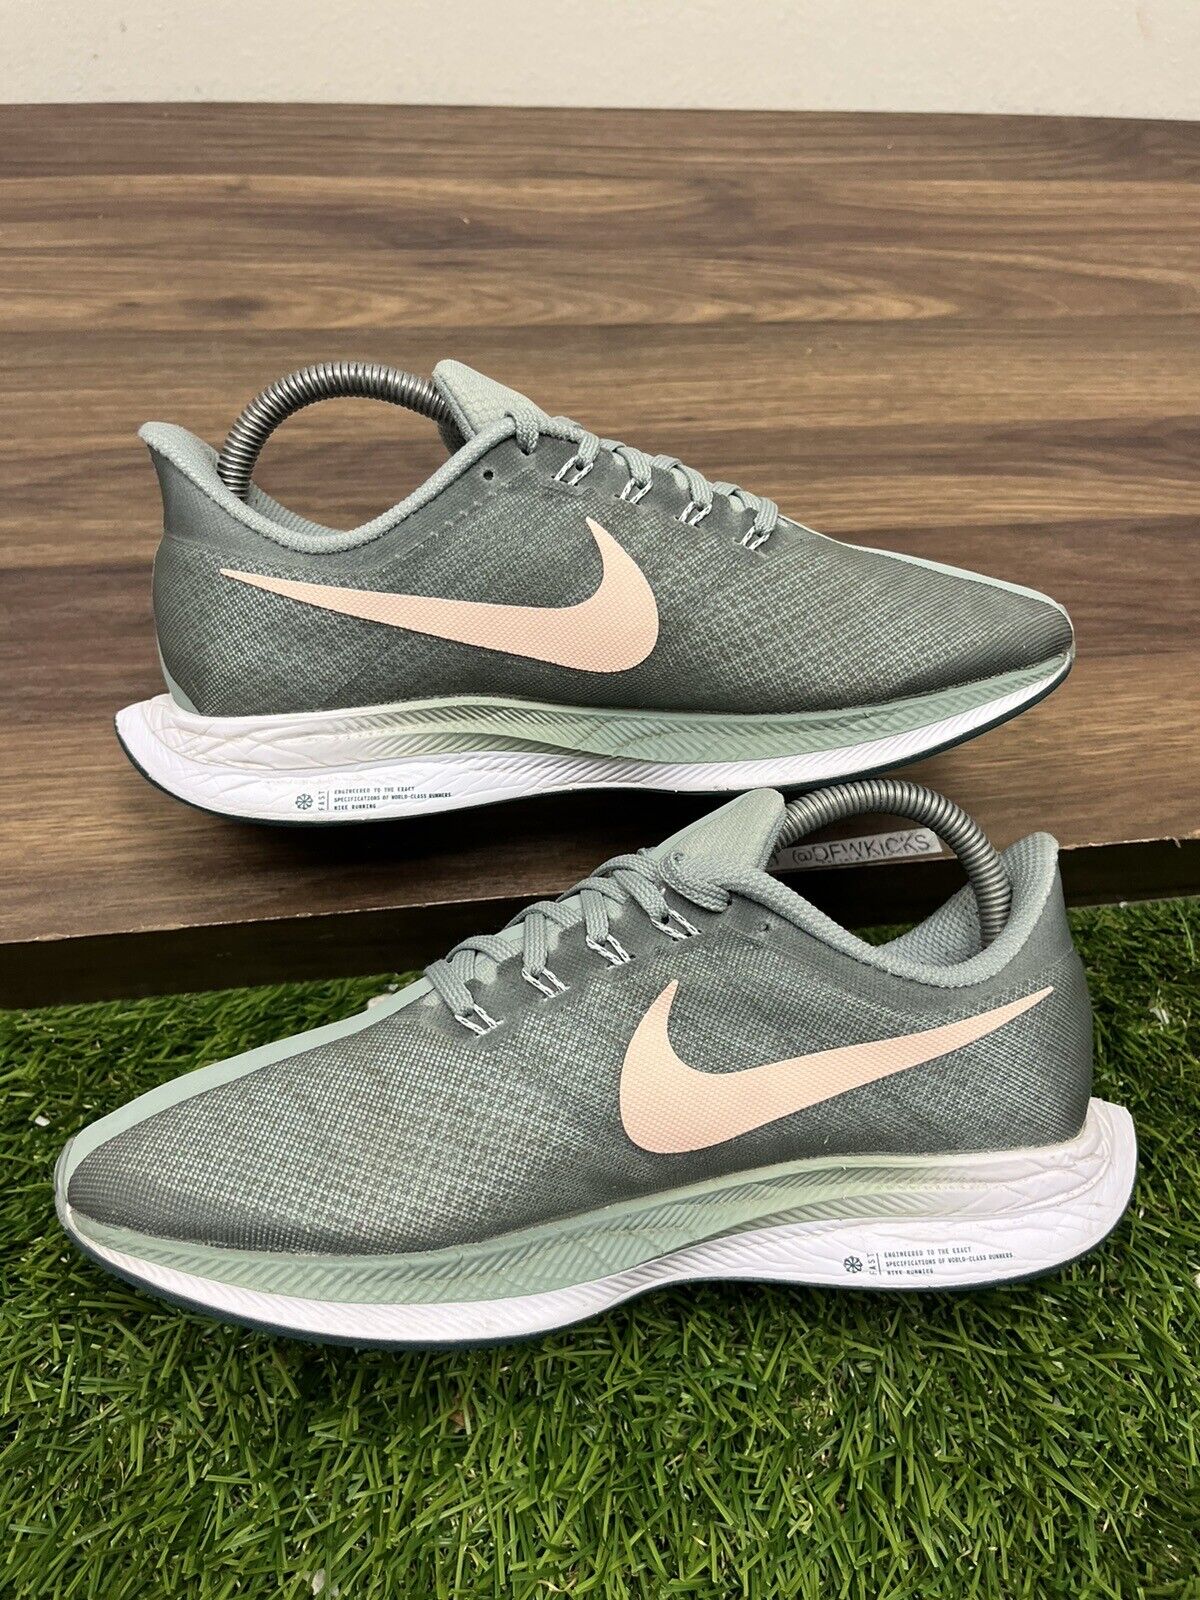 Nike Womens Zoom Pegasus 35 Turbo AJ4115-300 Green Running Shoes Sneakers Sz 7.5